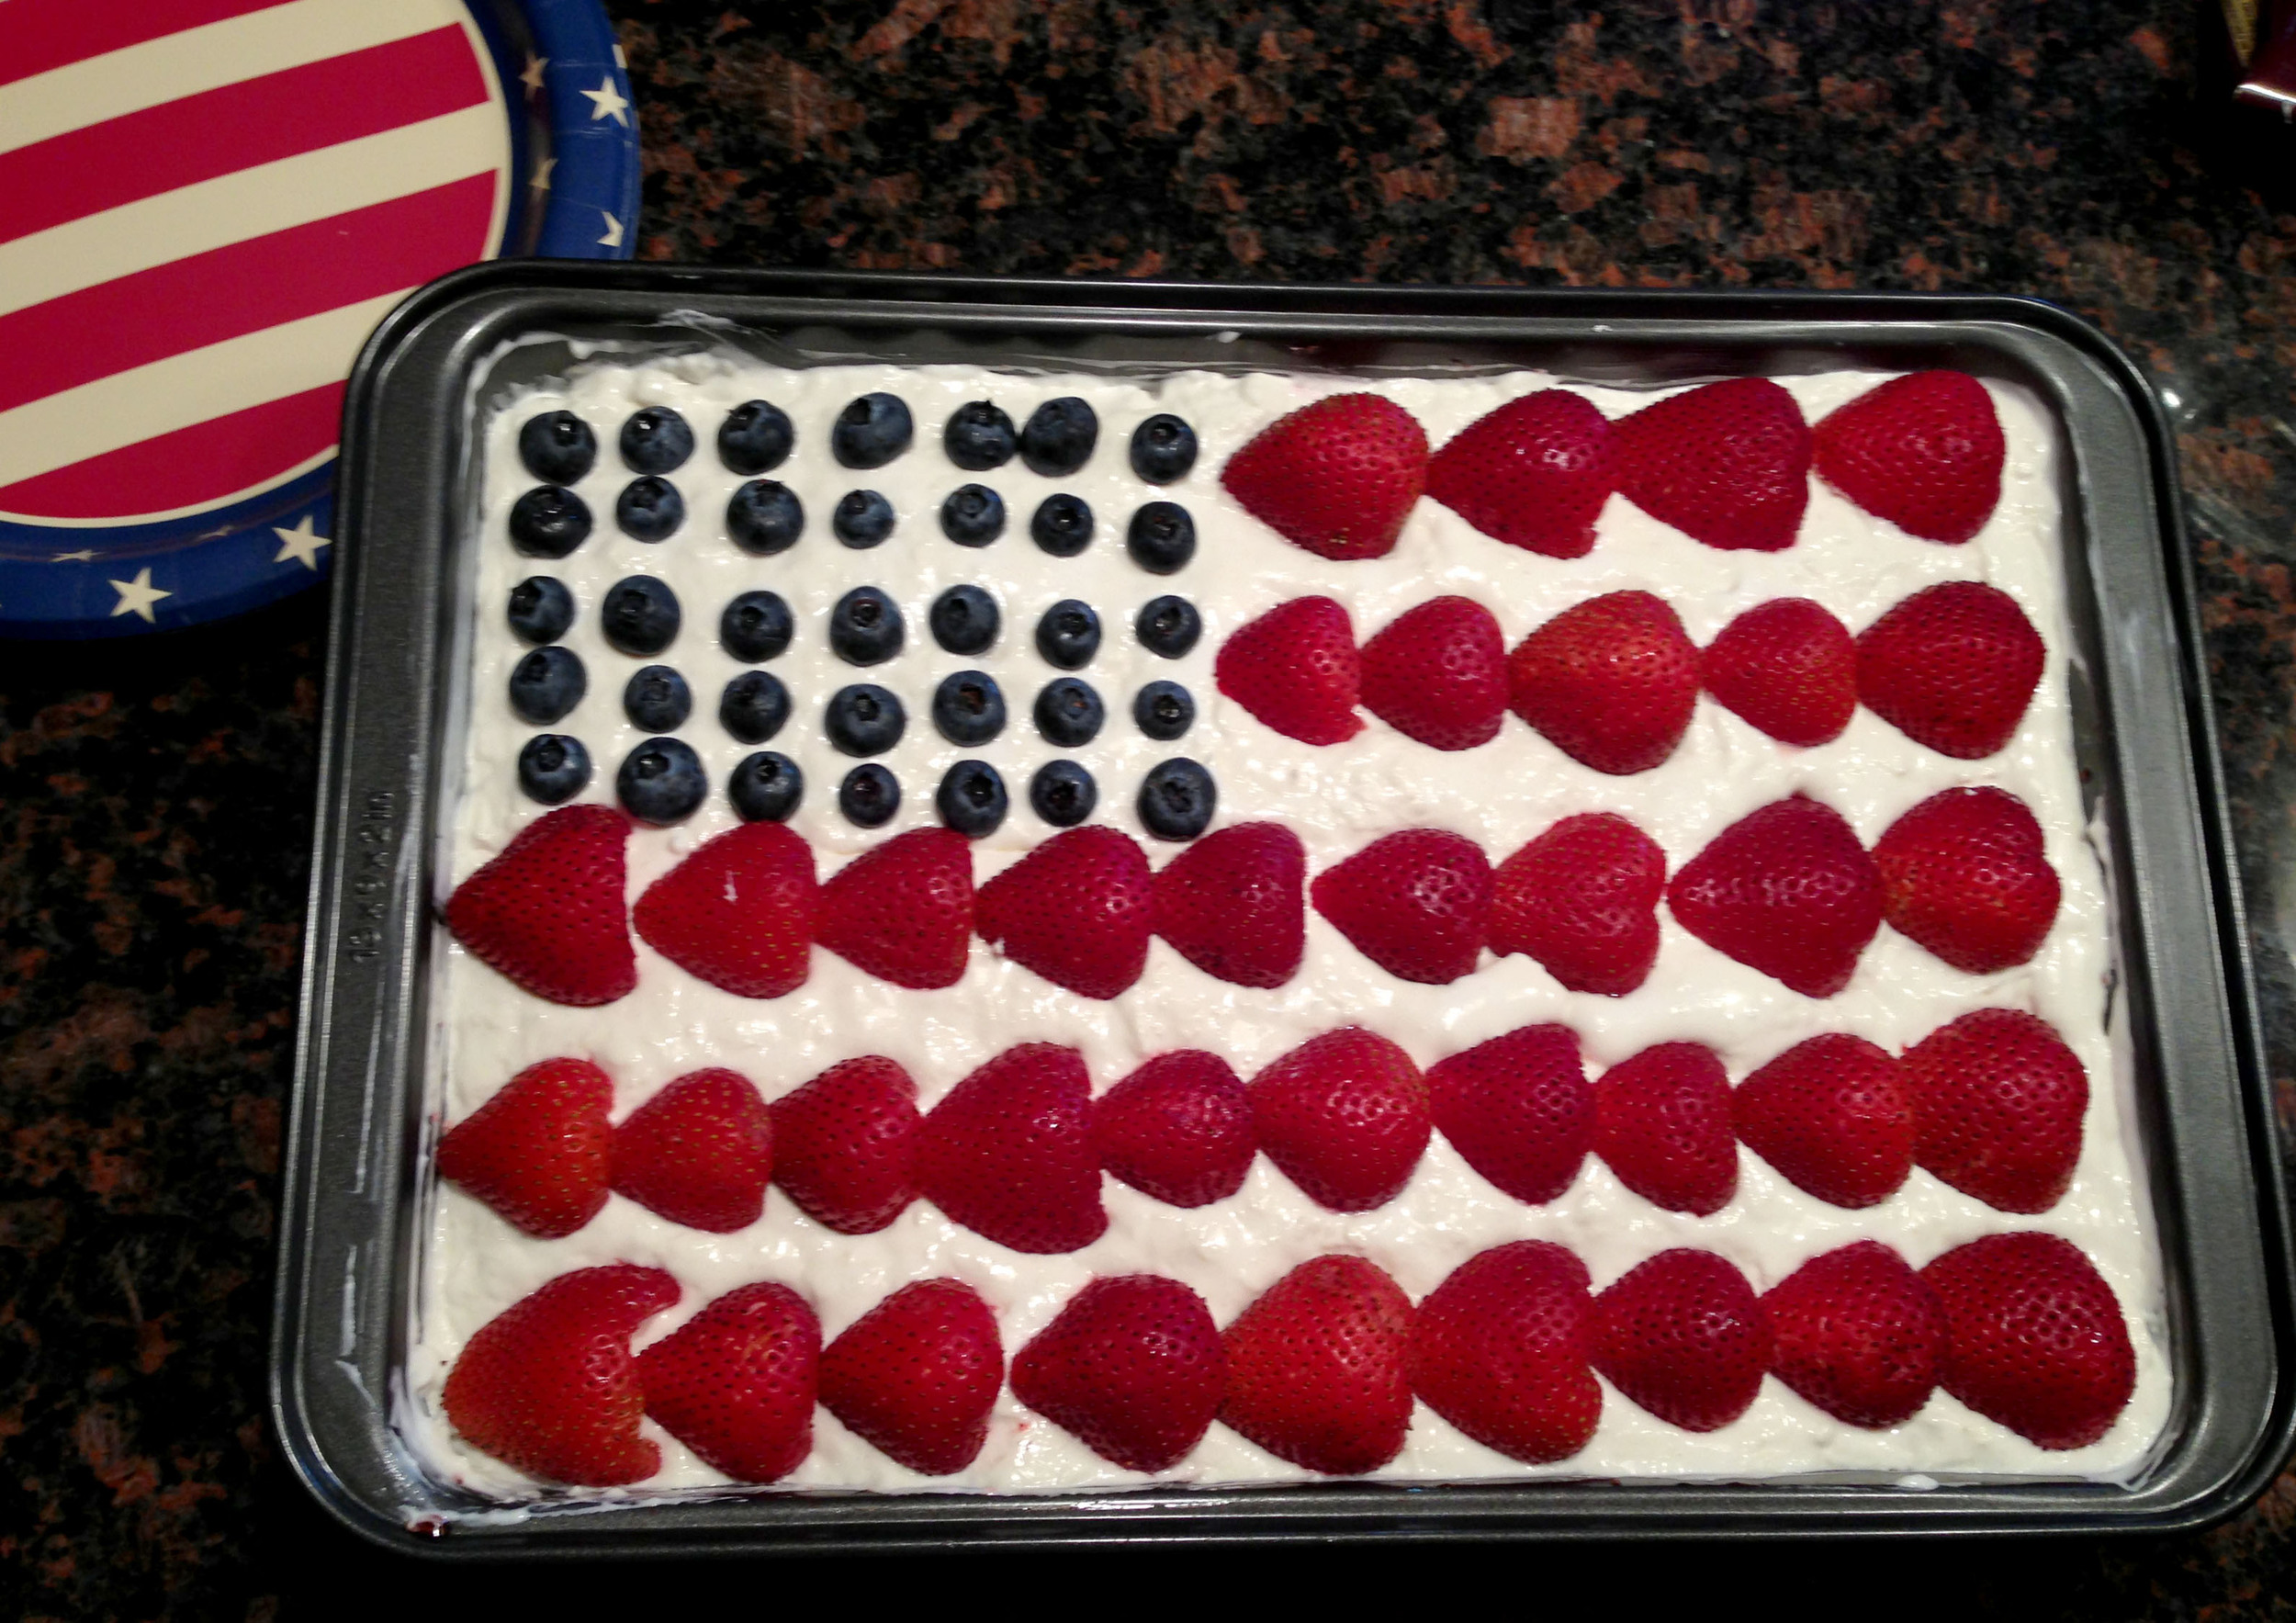 Tastiest American flag I've ever seen!